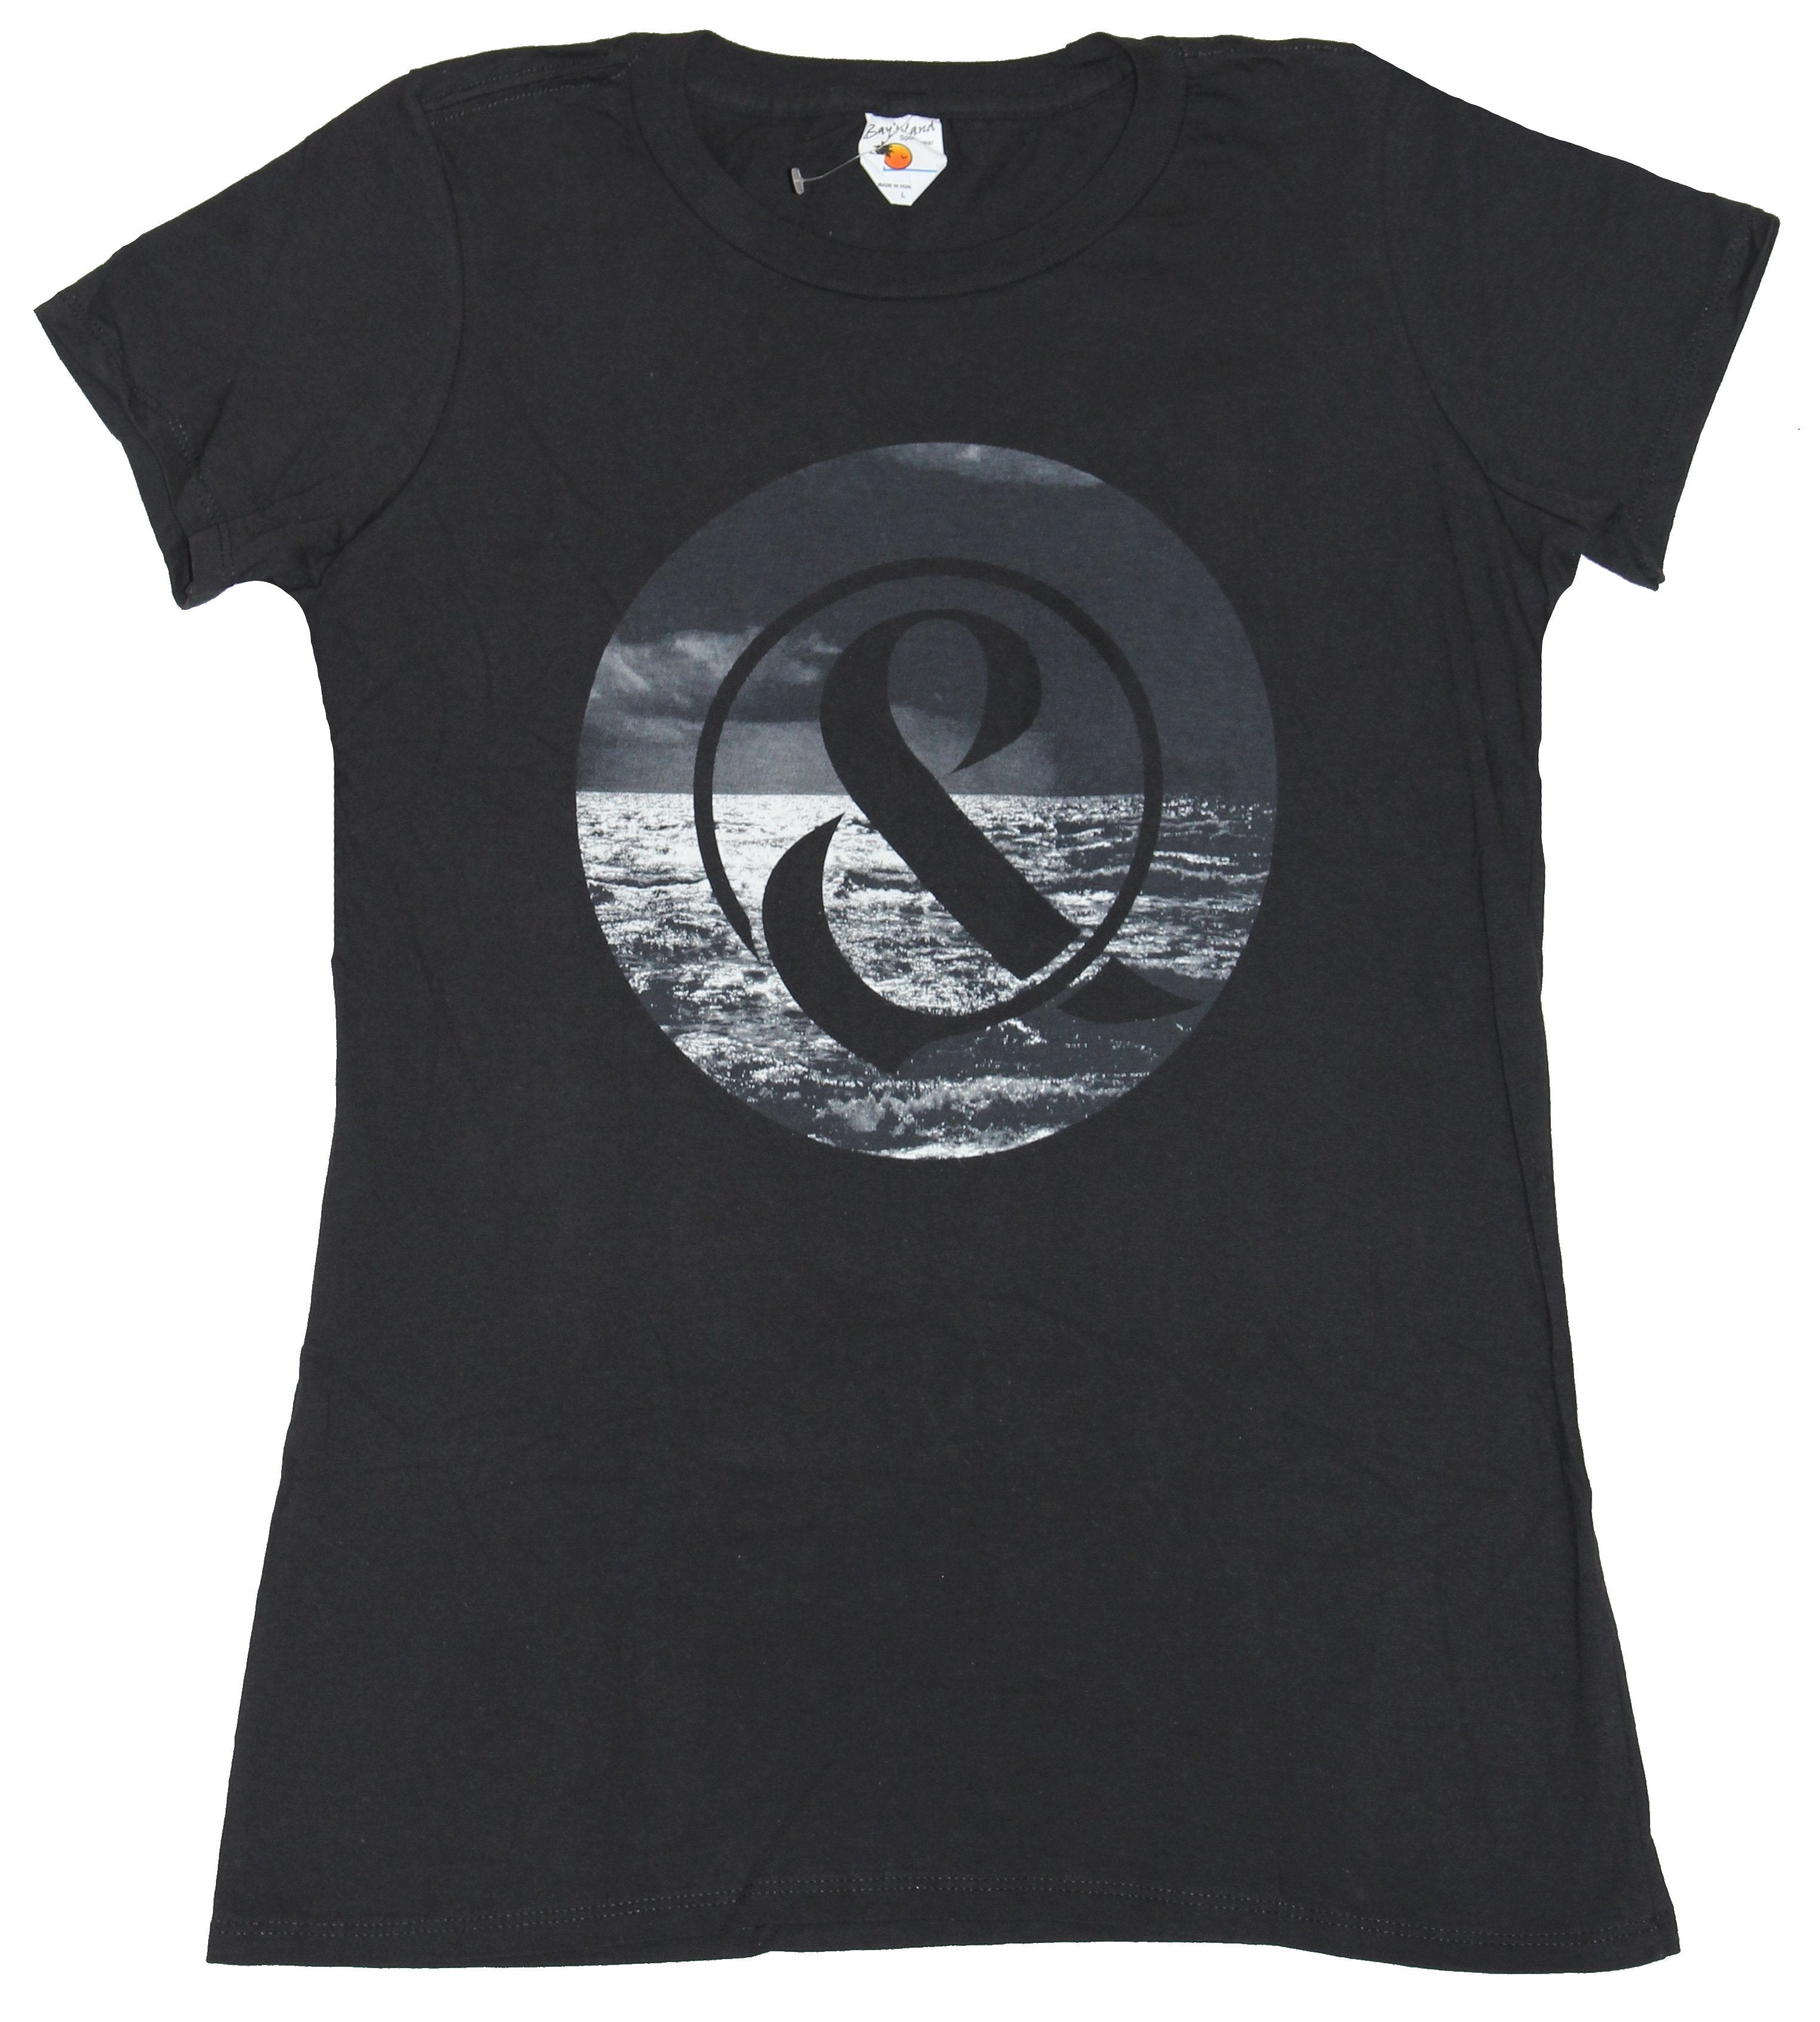 Of Mice and Men Girls Juniors T-Shirt - Circled Ampersand Ocean Image